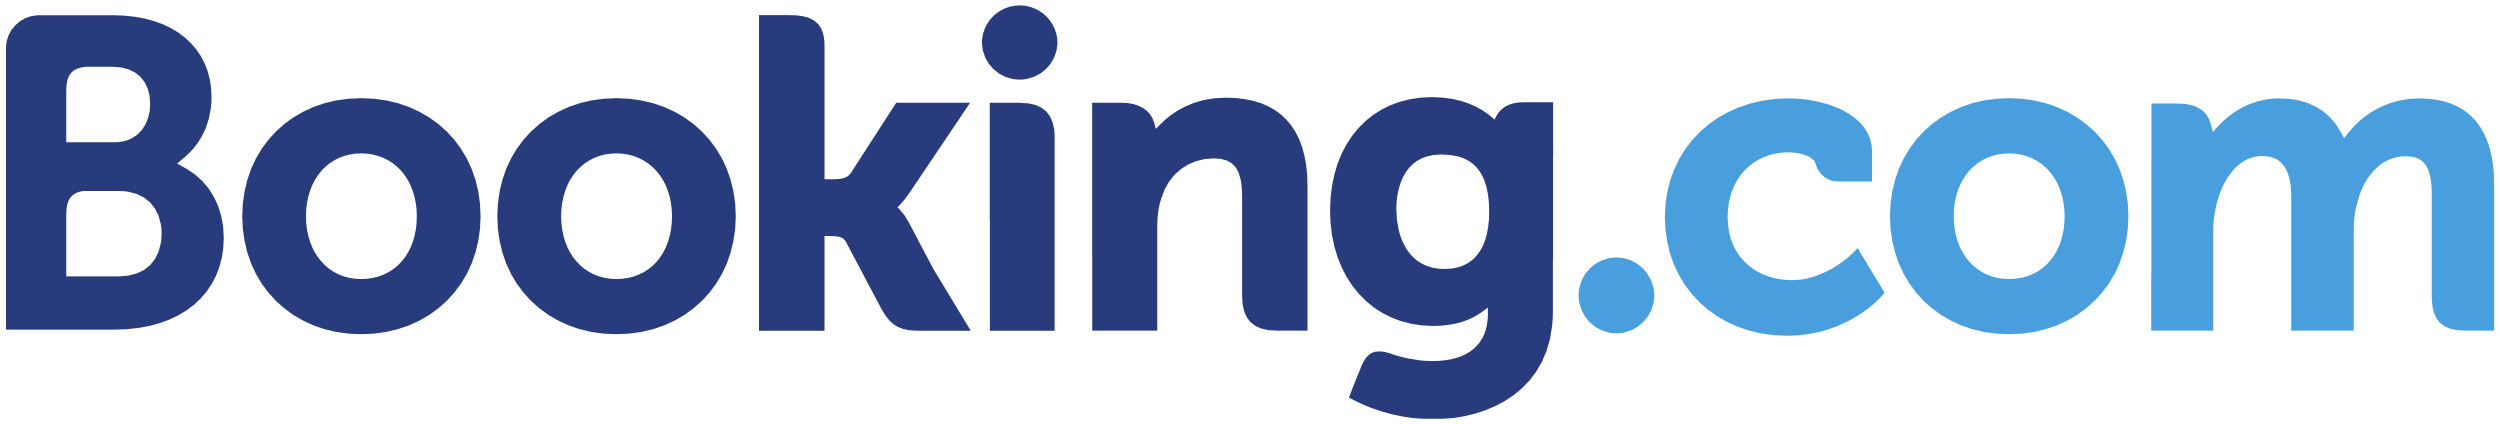 Booking_com_logo_PNG1